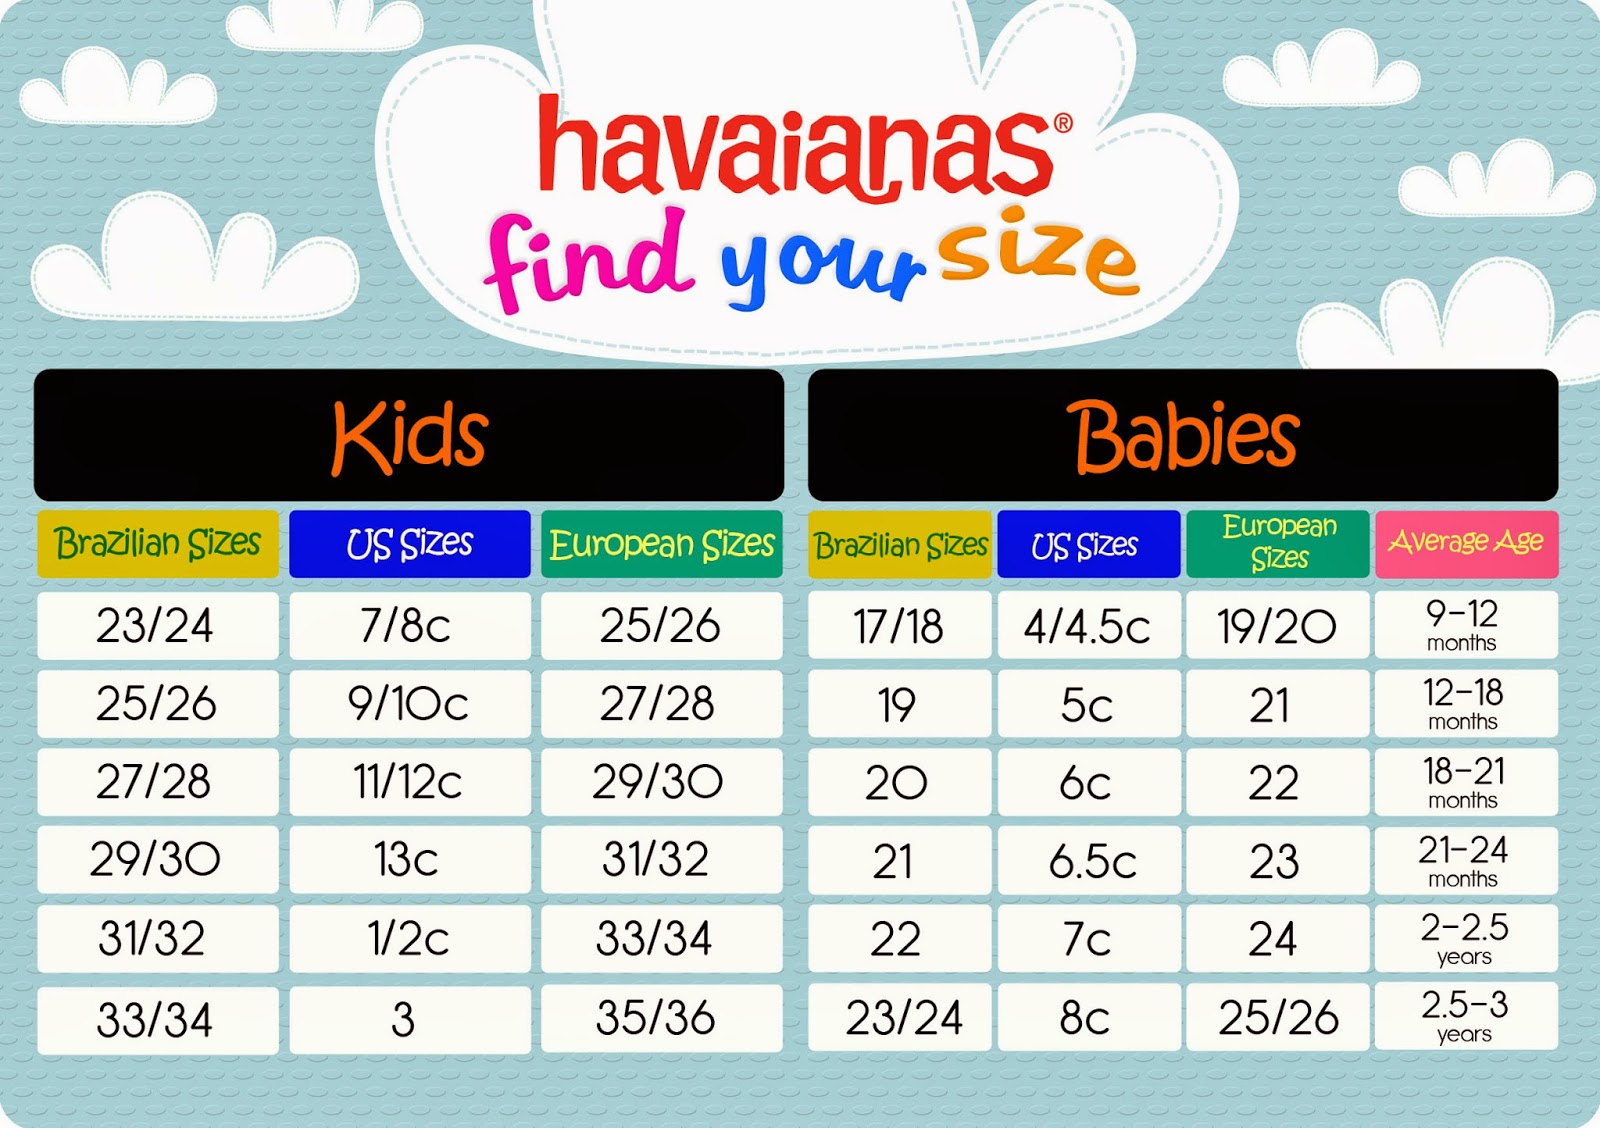 kids havaianas size guide